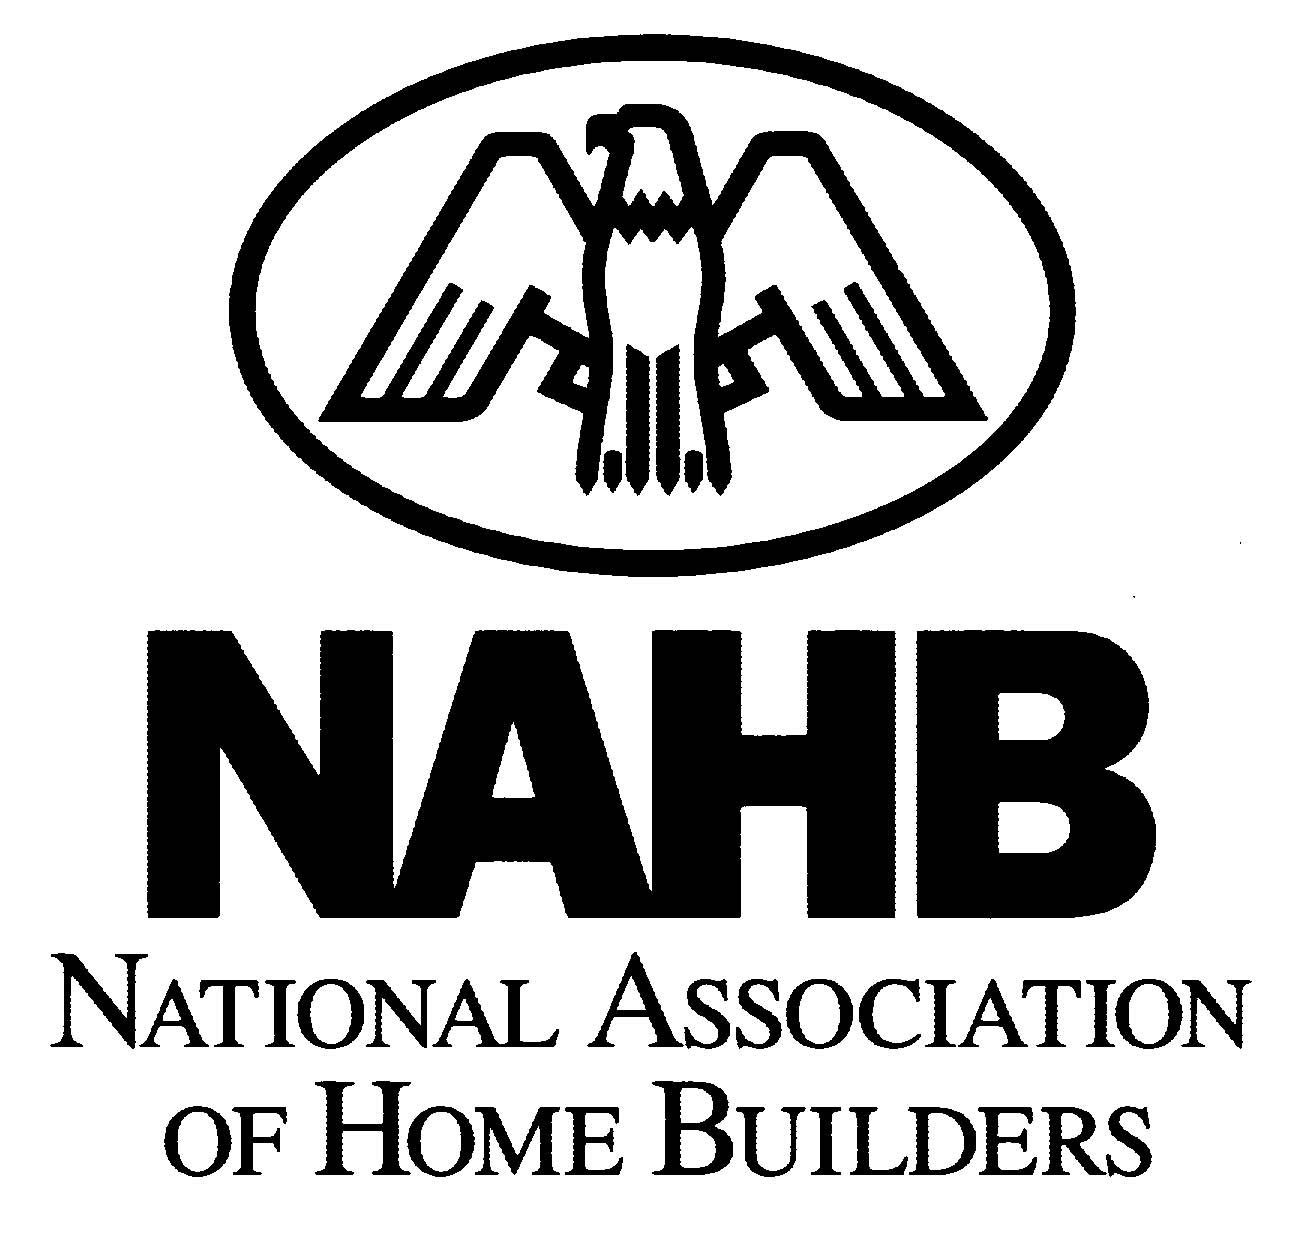 Proud member since 1999.  www.NAHB.com